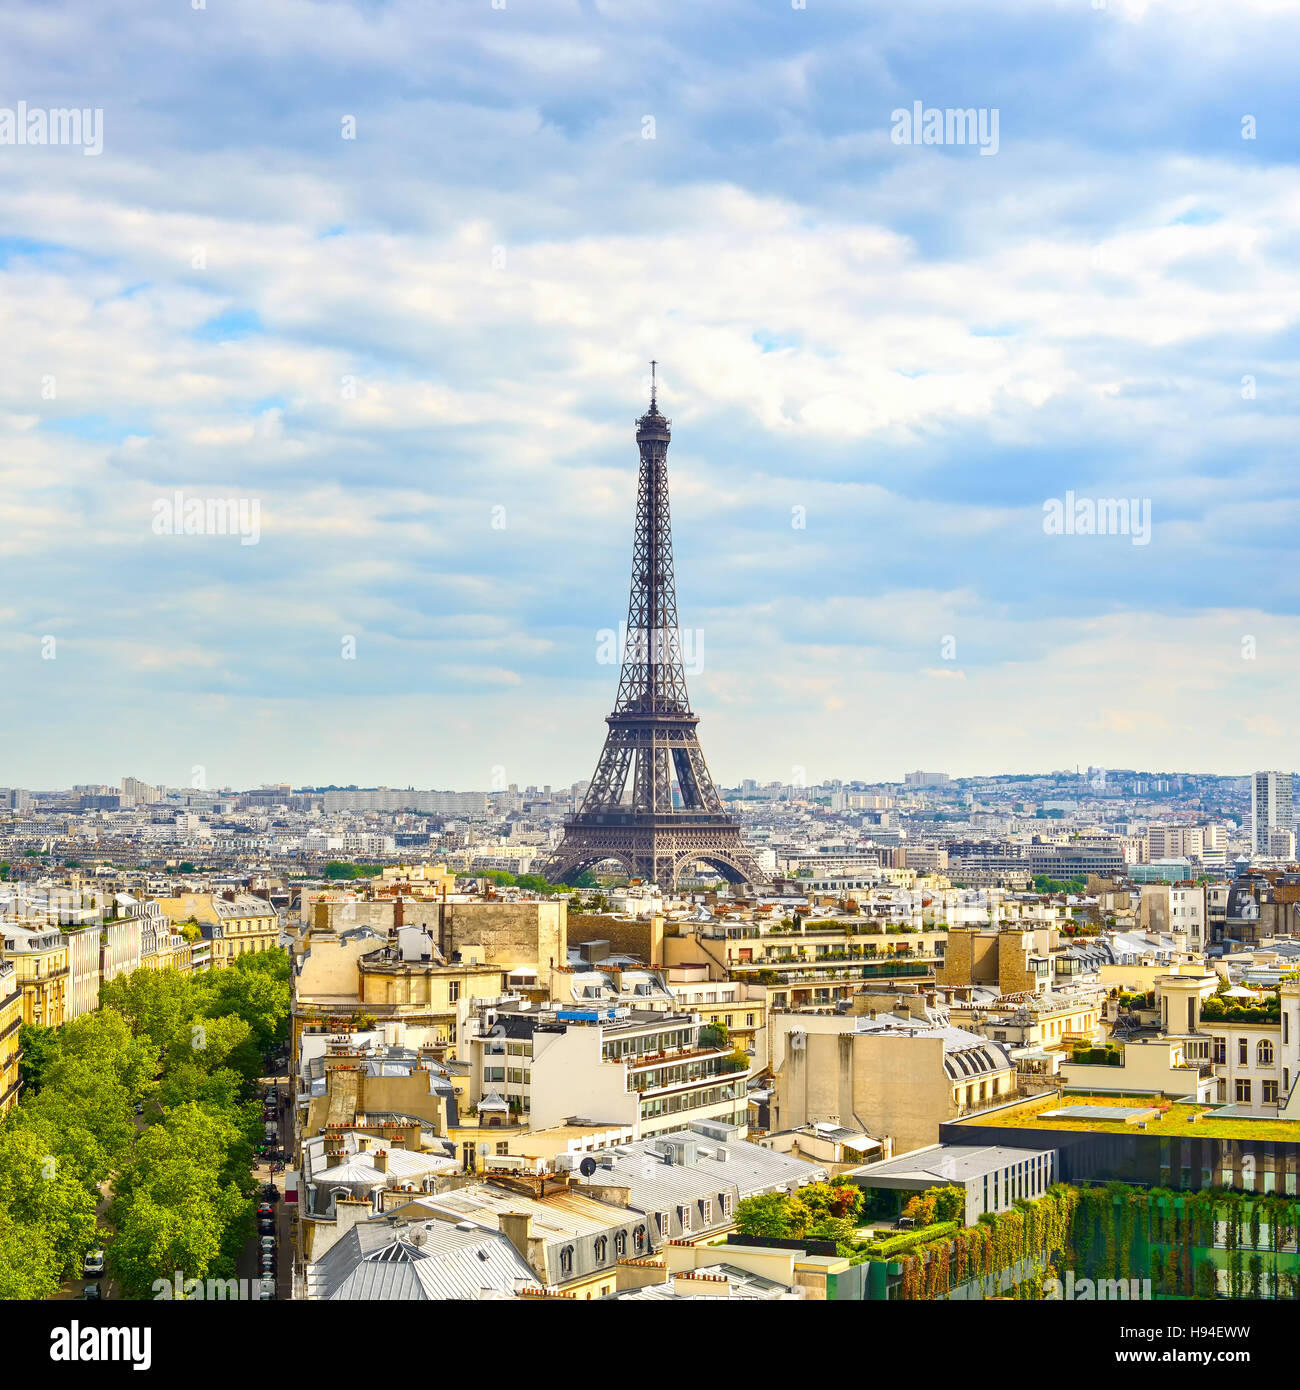 Eiffel Tower landmark, view from Arc de Triomphe. Paris cityscape. France, Europe. Stock Photo